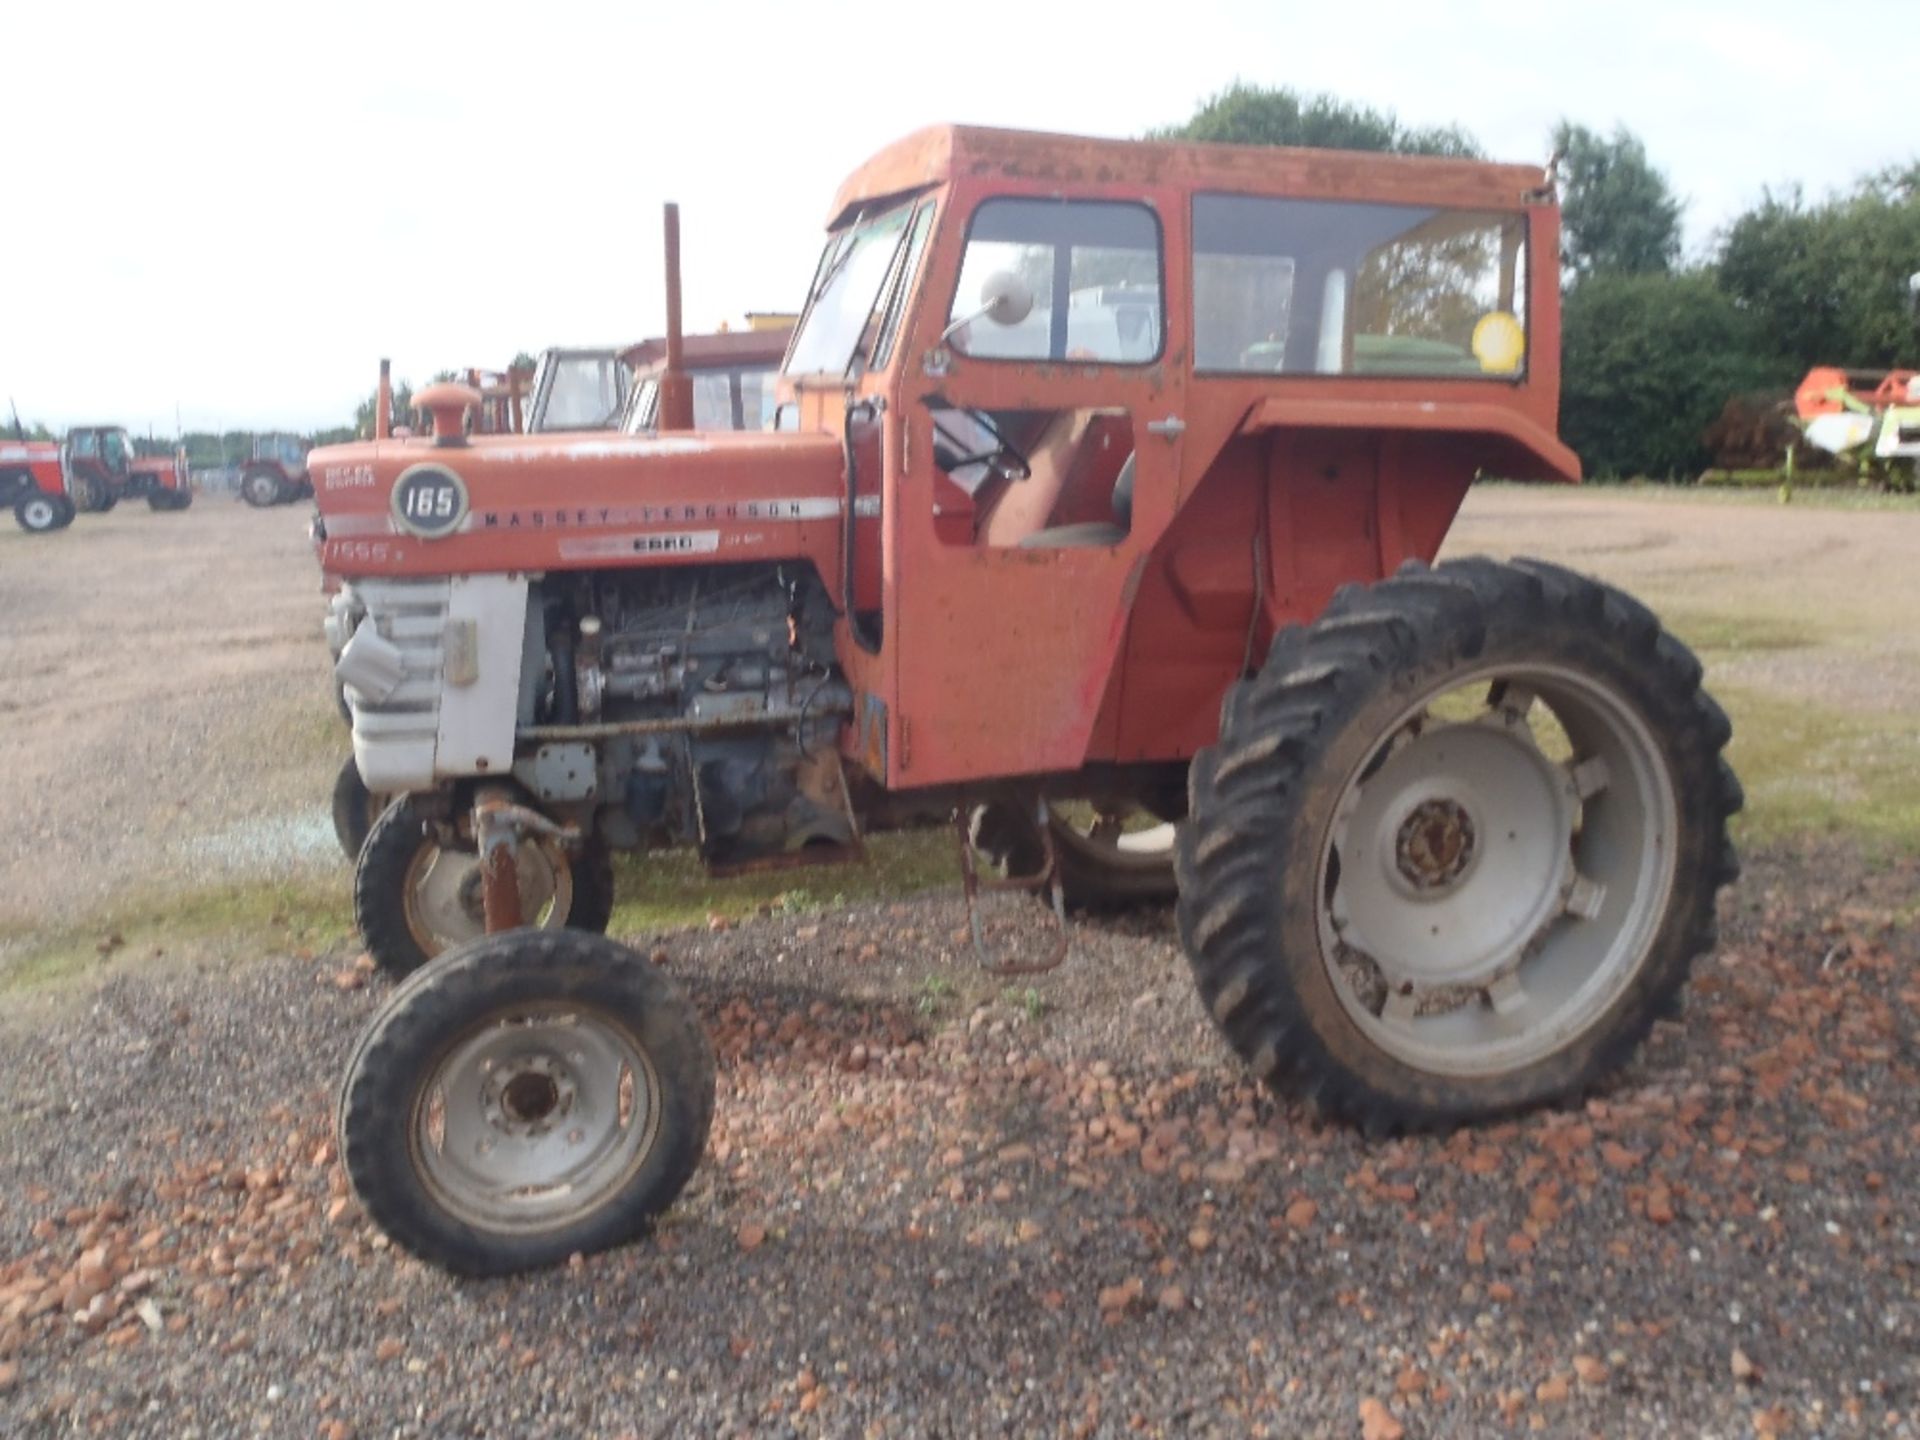 Massey Ferguson 165 Tractor. Ser. No. X149017